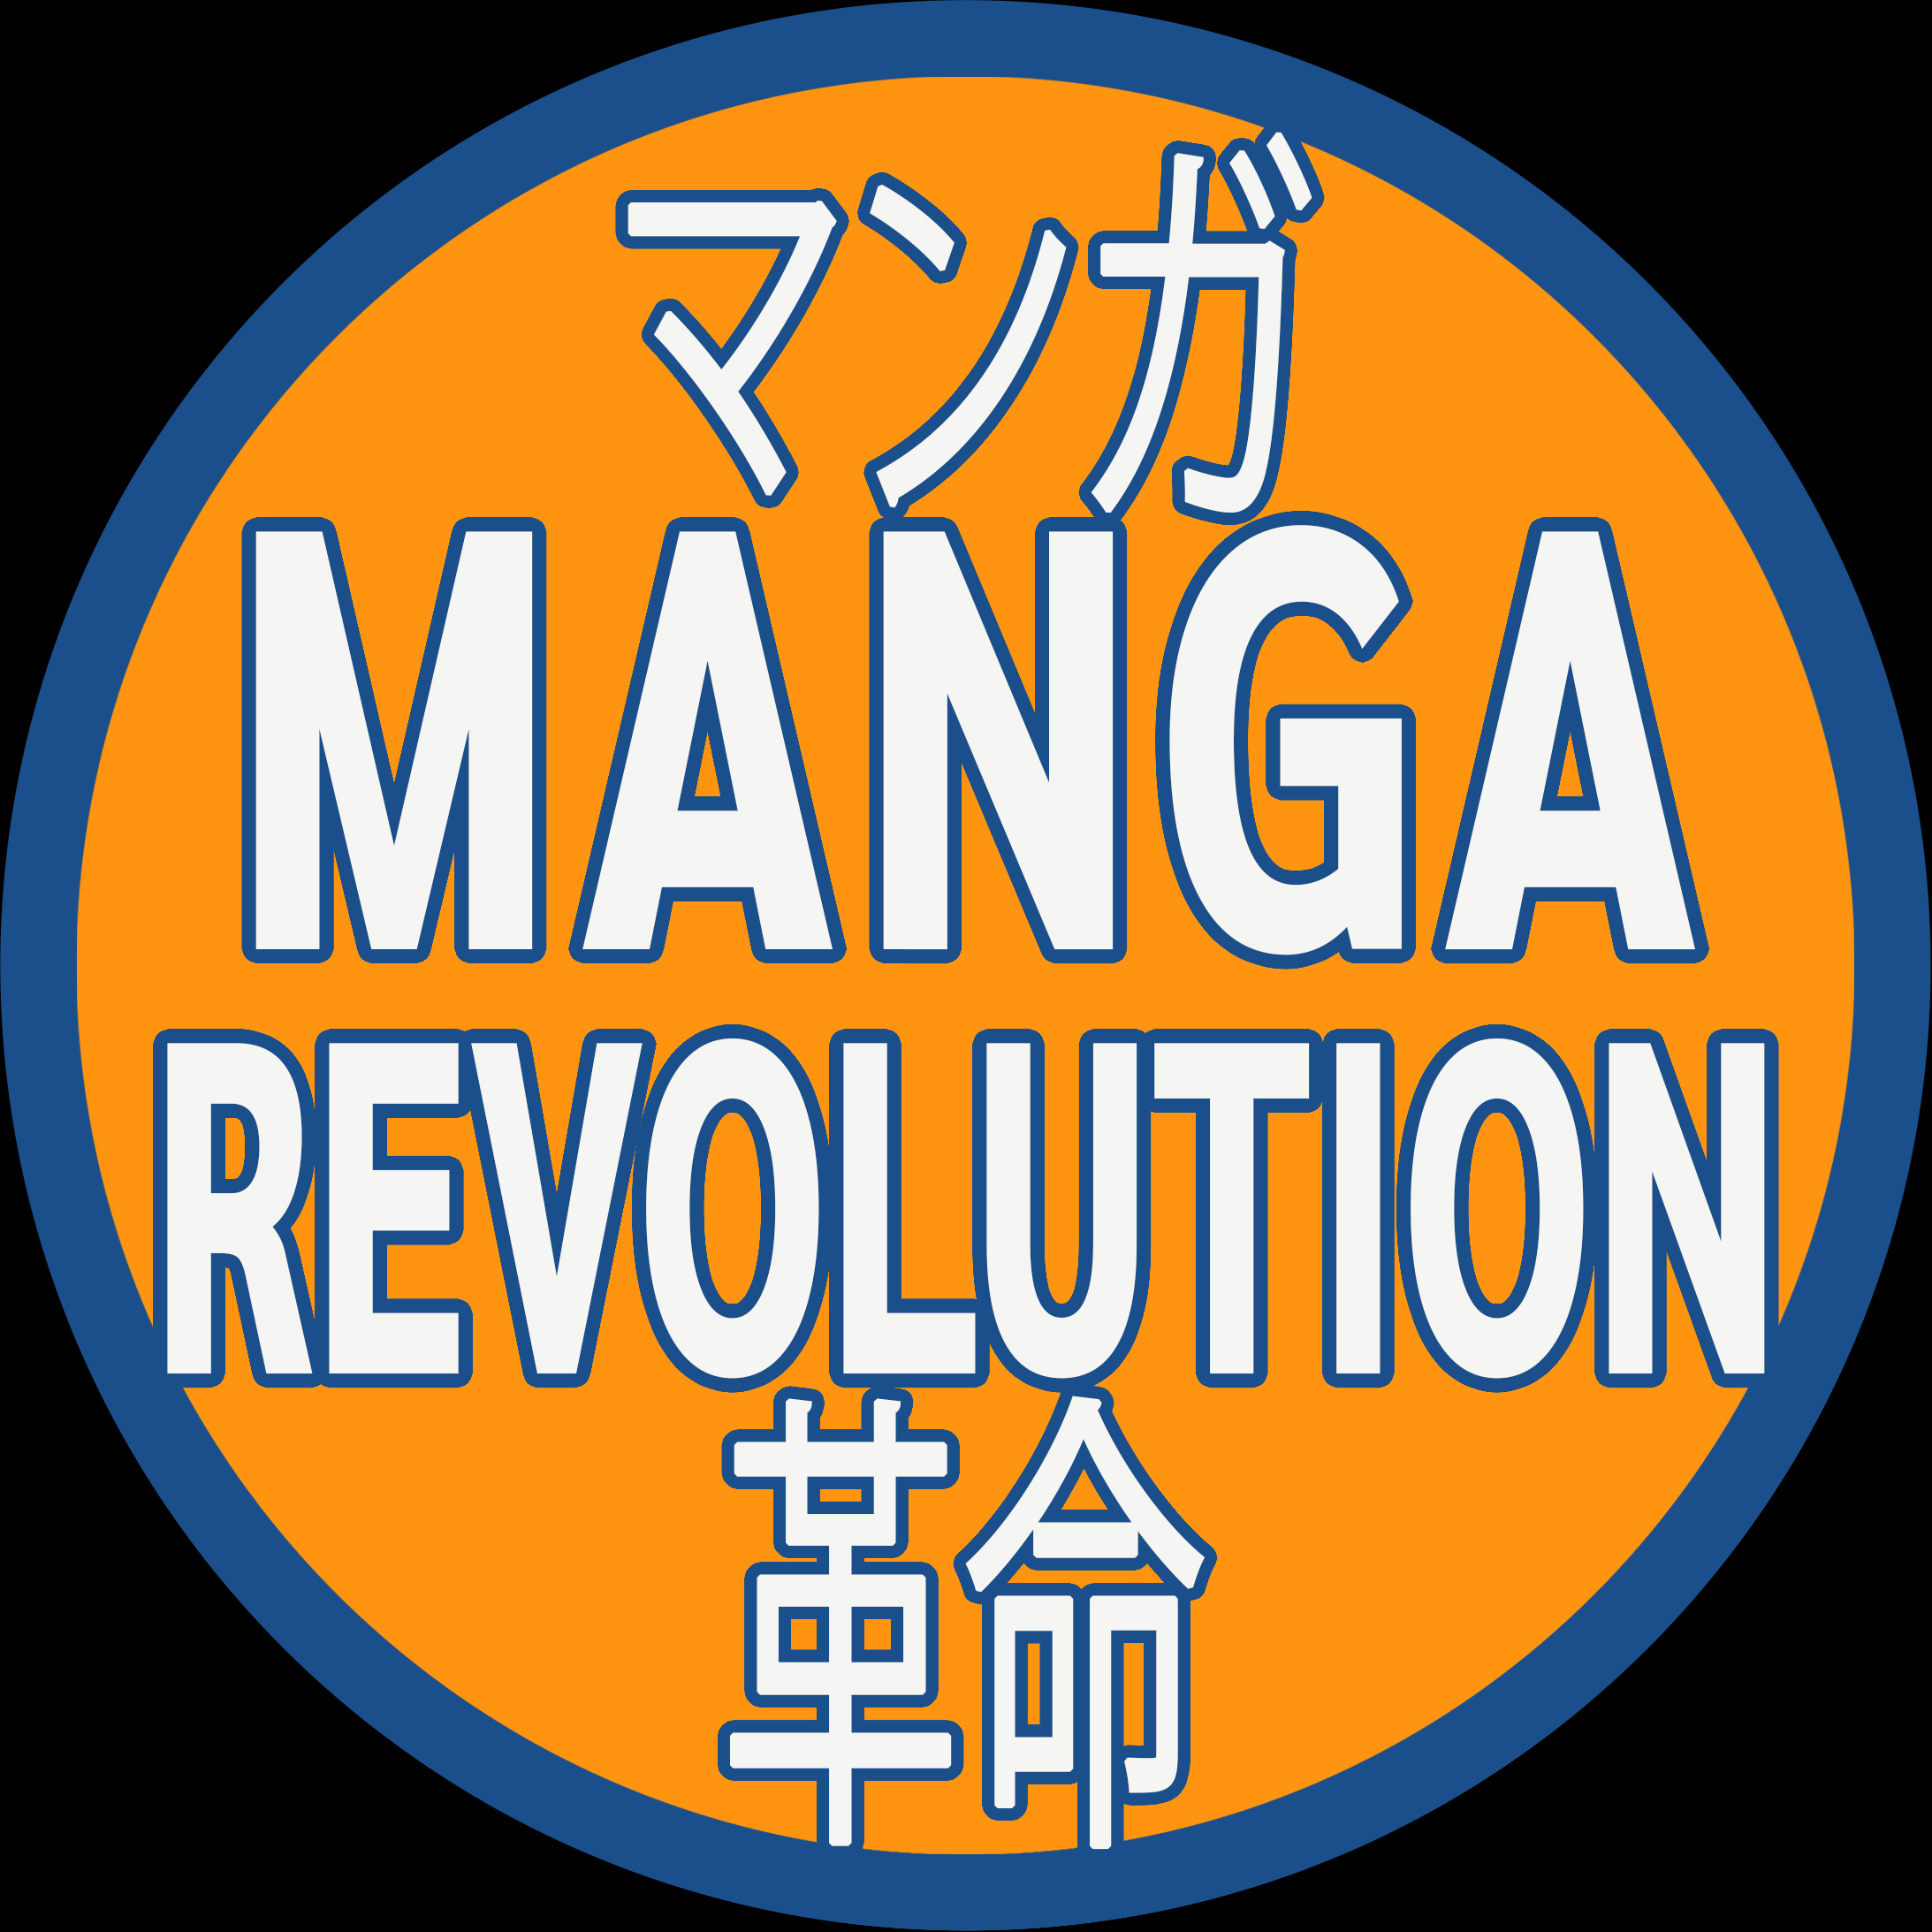 Jiangshi X Chapter 1 Review - Manga Revolution Podcast Episode 51